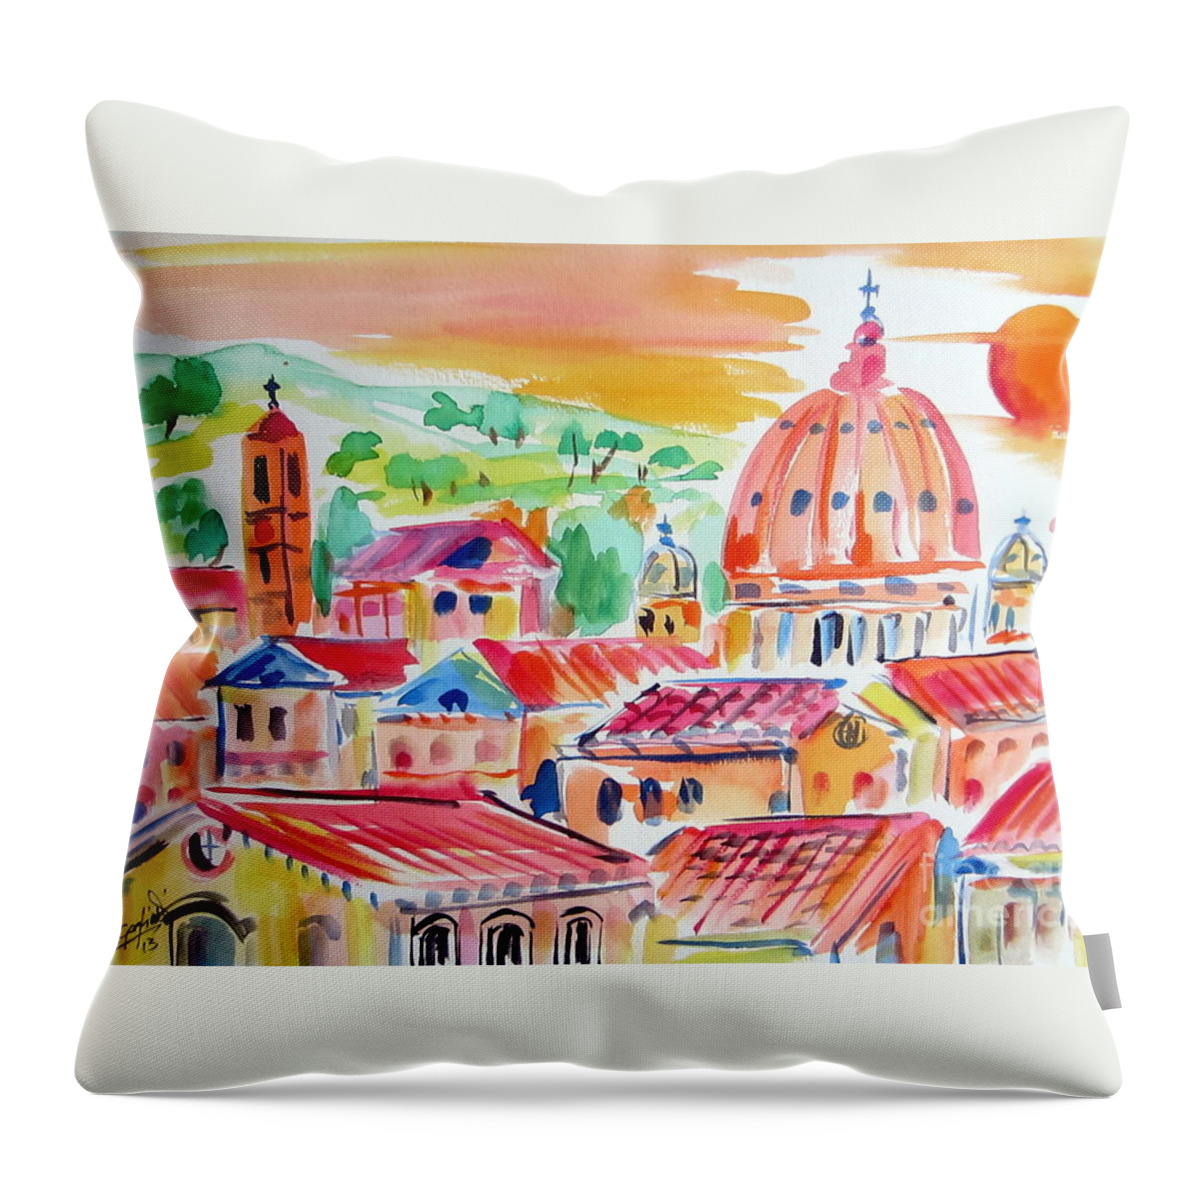 Tetti Throw Pillow featuring the painting Tetti e cupole di Roma by Roberto Gagliardi